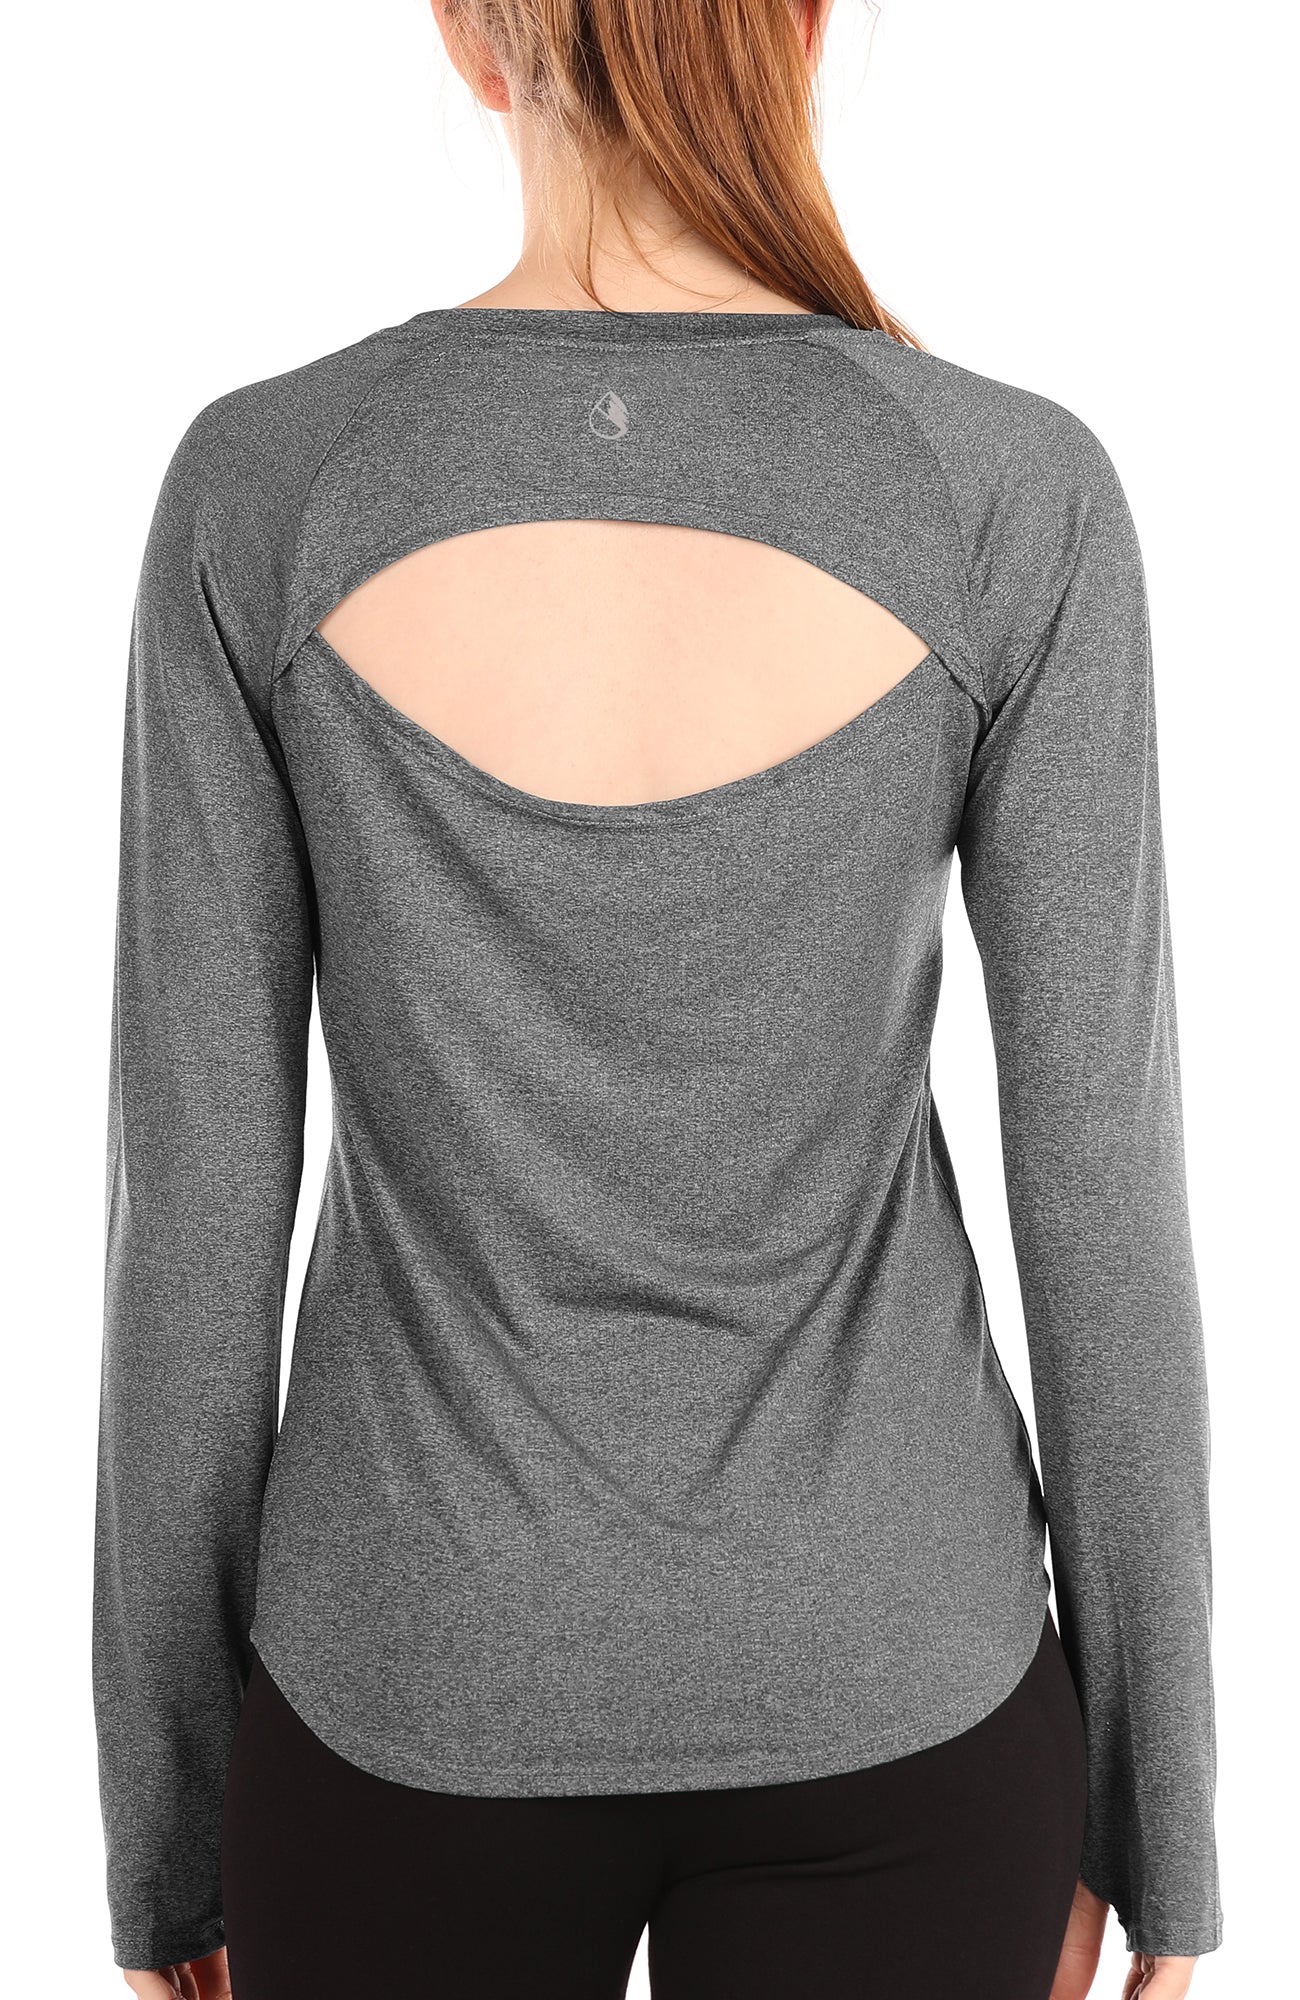 Women's Long Sleeve Gym Tops & T-shirts